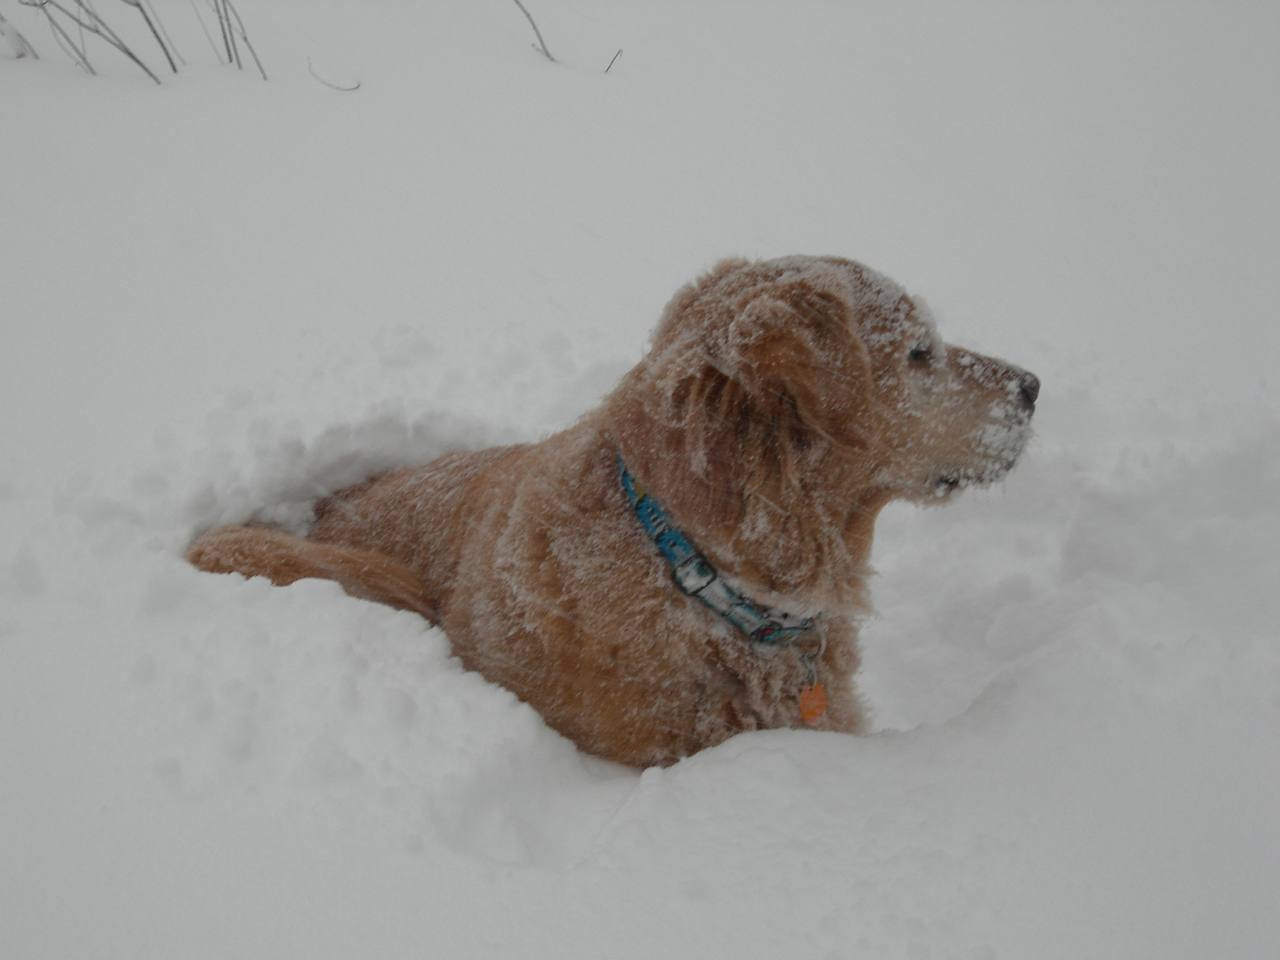 Burnie in the snow